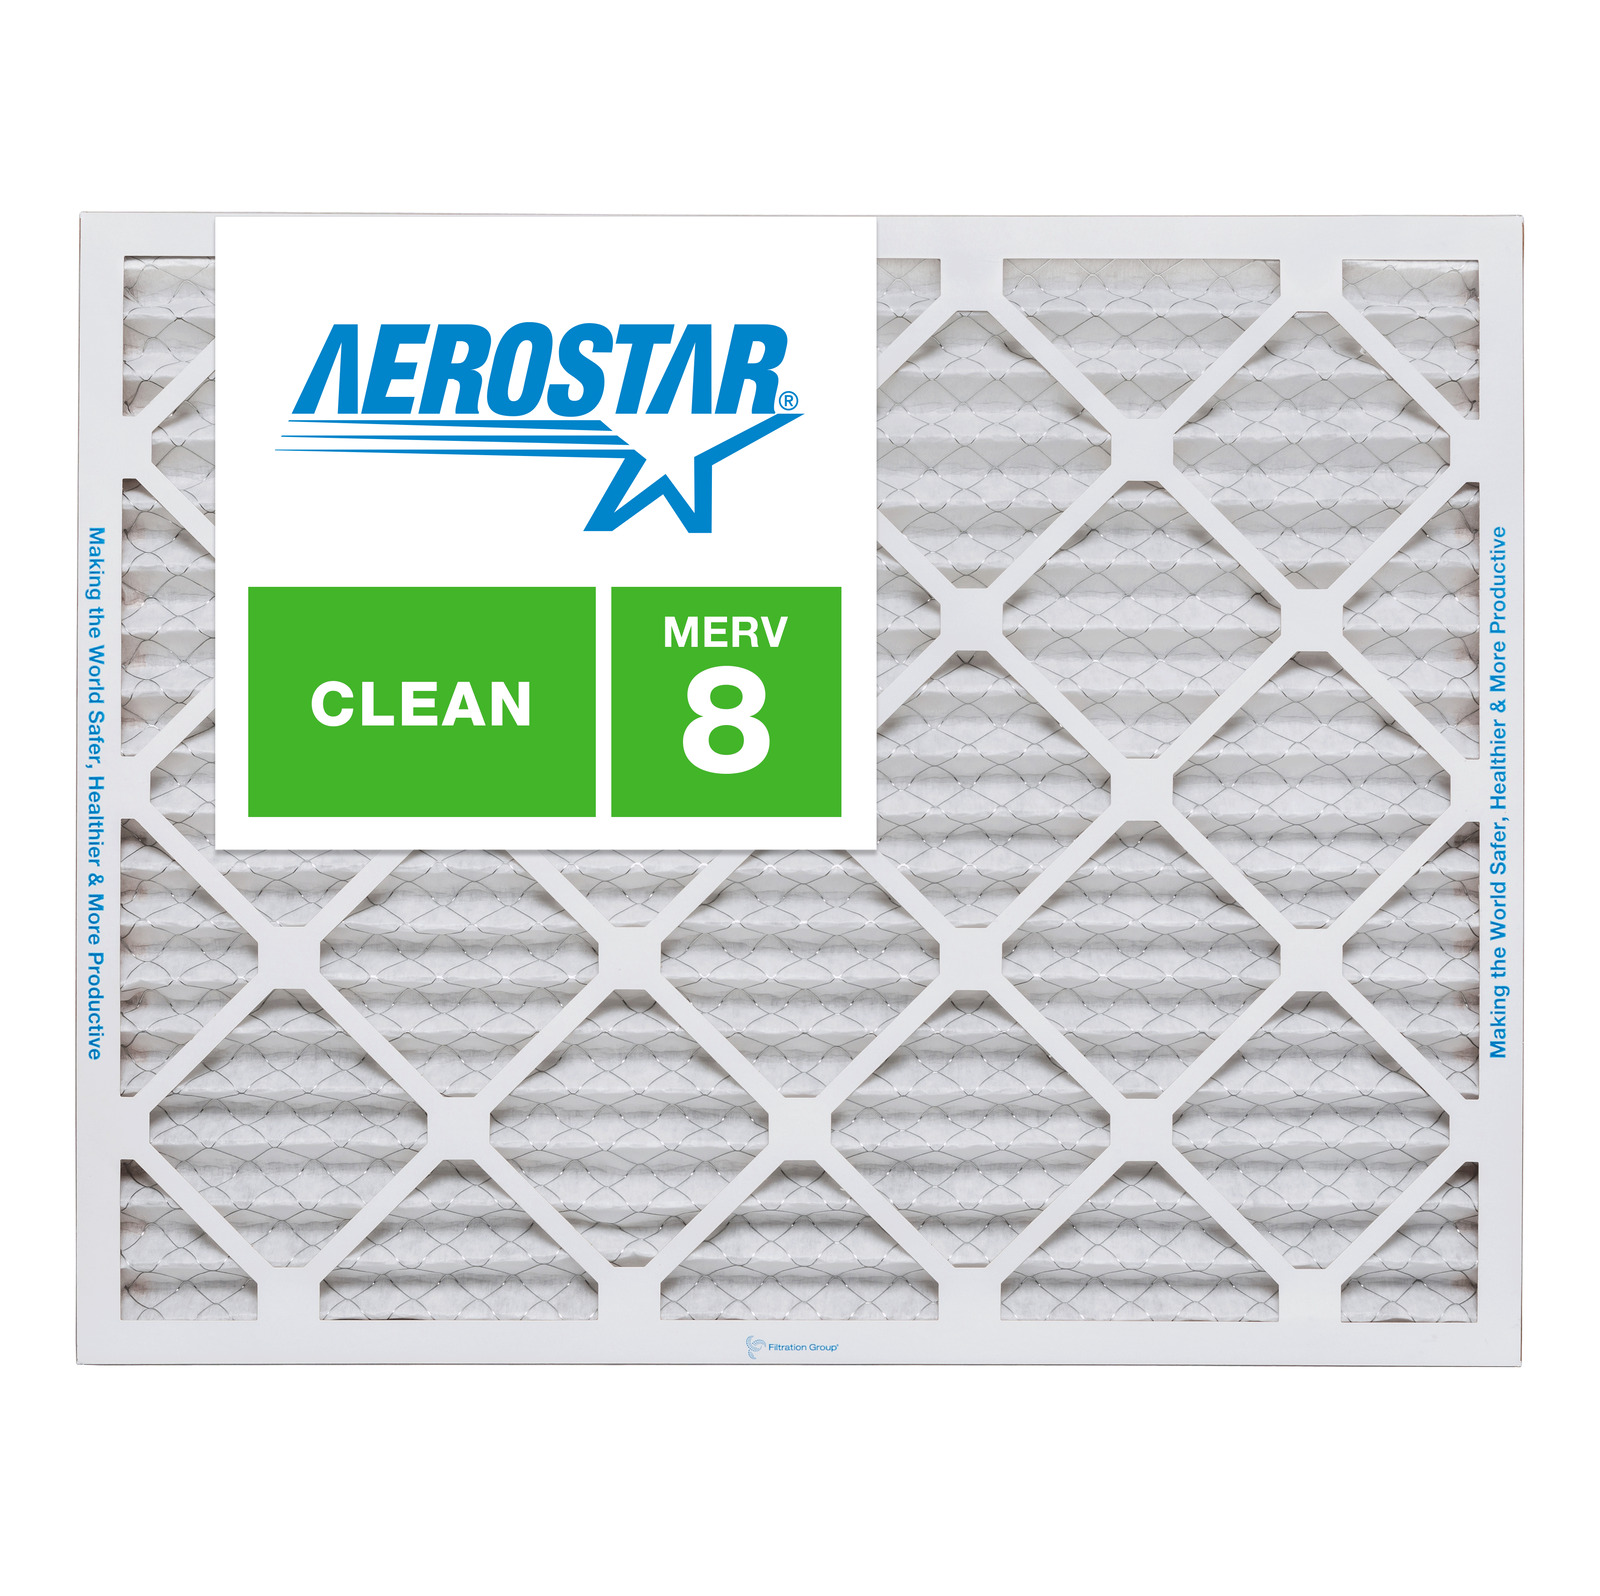 Aerostar 16x25x1 MERV 8 Furnace Air Filter, 12 Pack